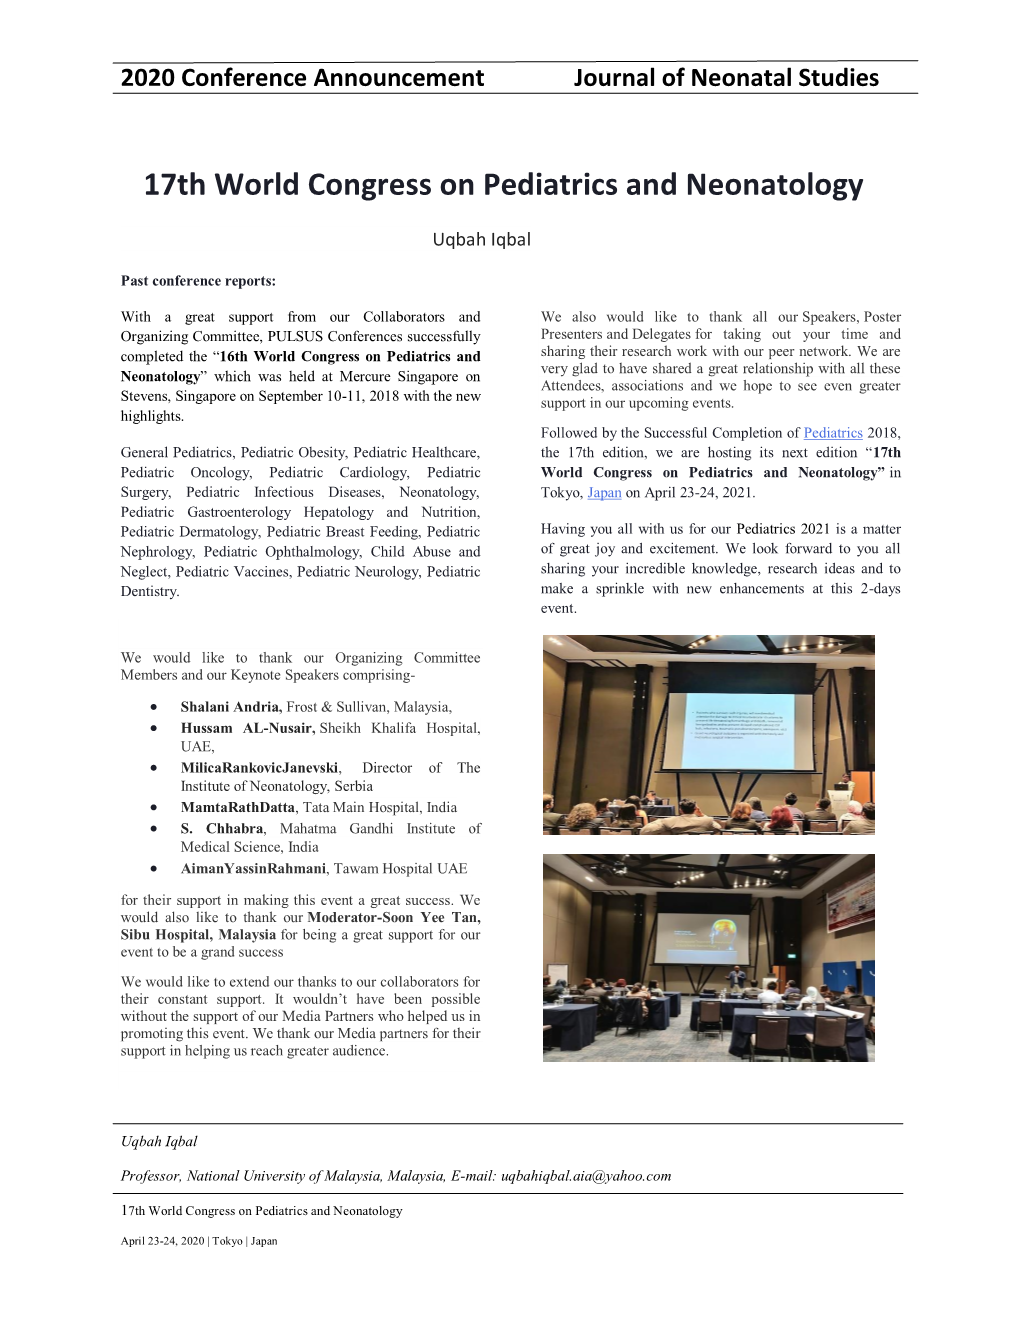 17Th World Congress on Pediatrics and Neonatology